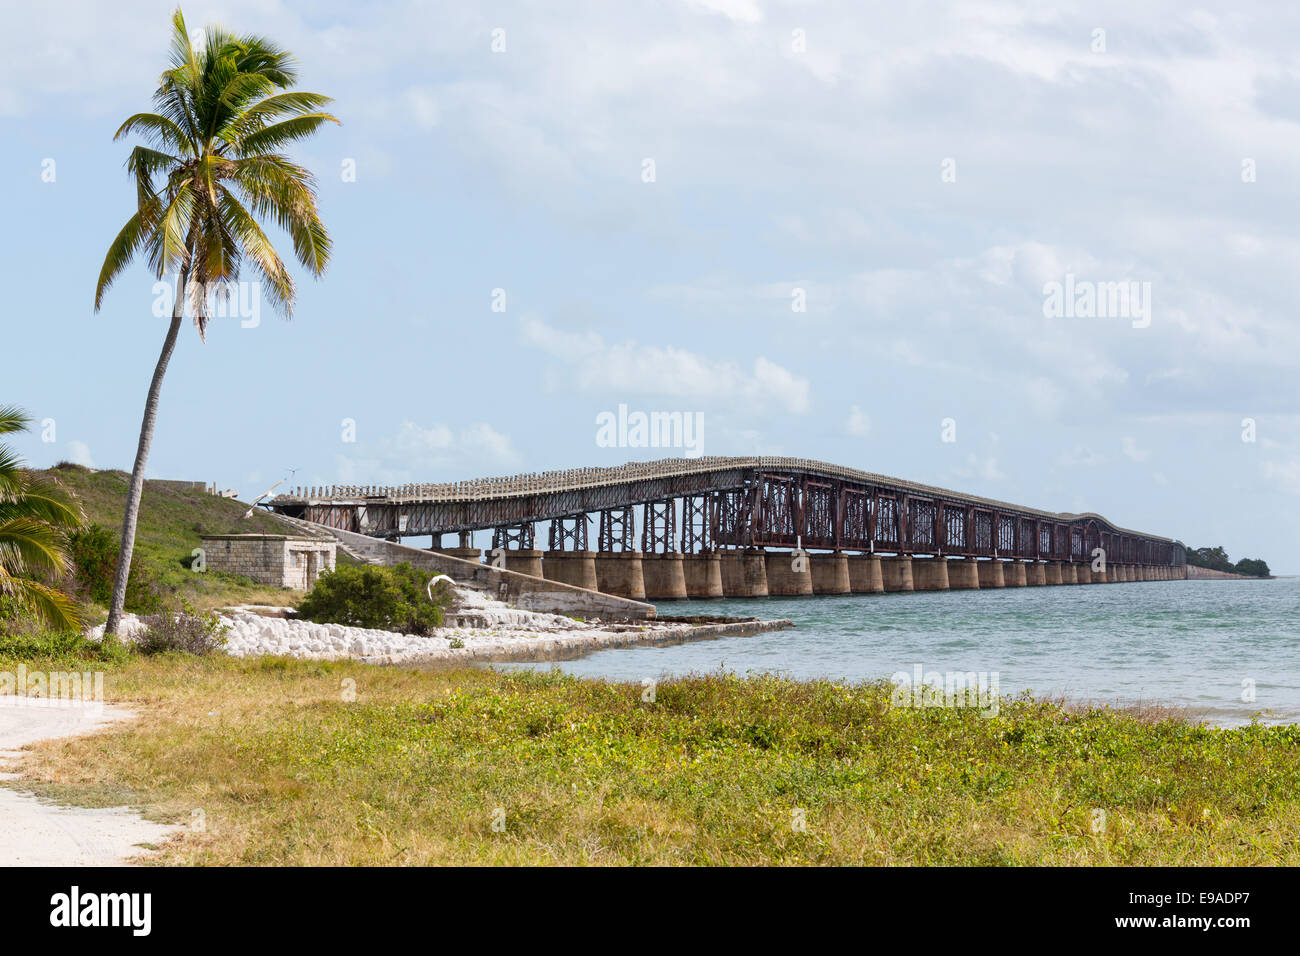 Florida Keys rail bridge and heritage trail Stock Photo